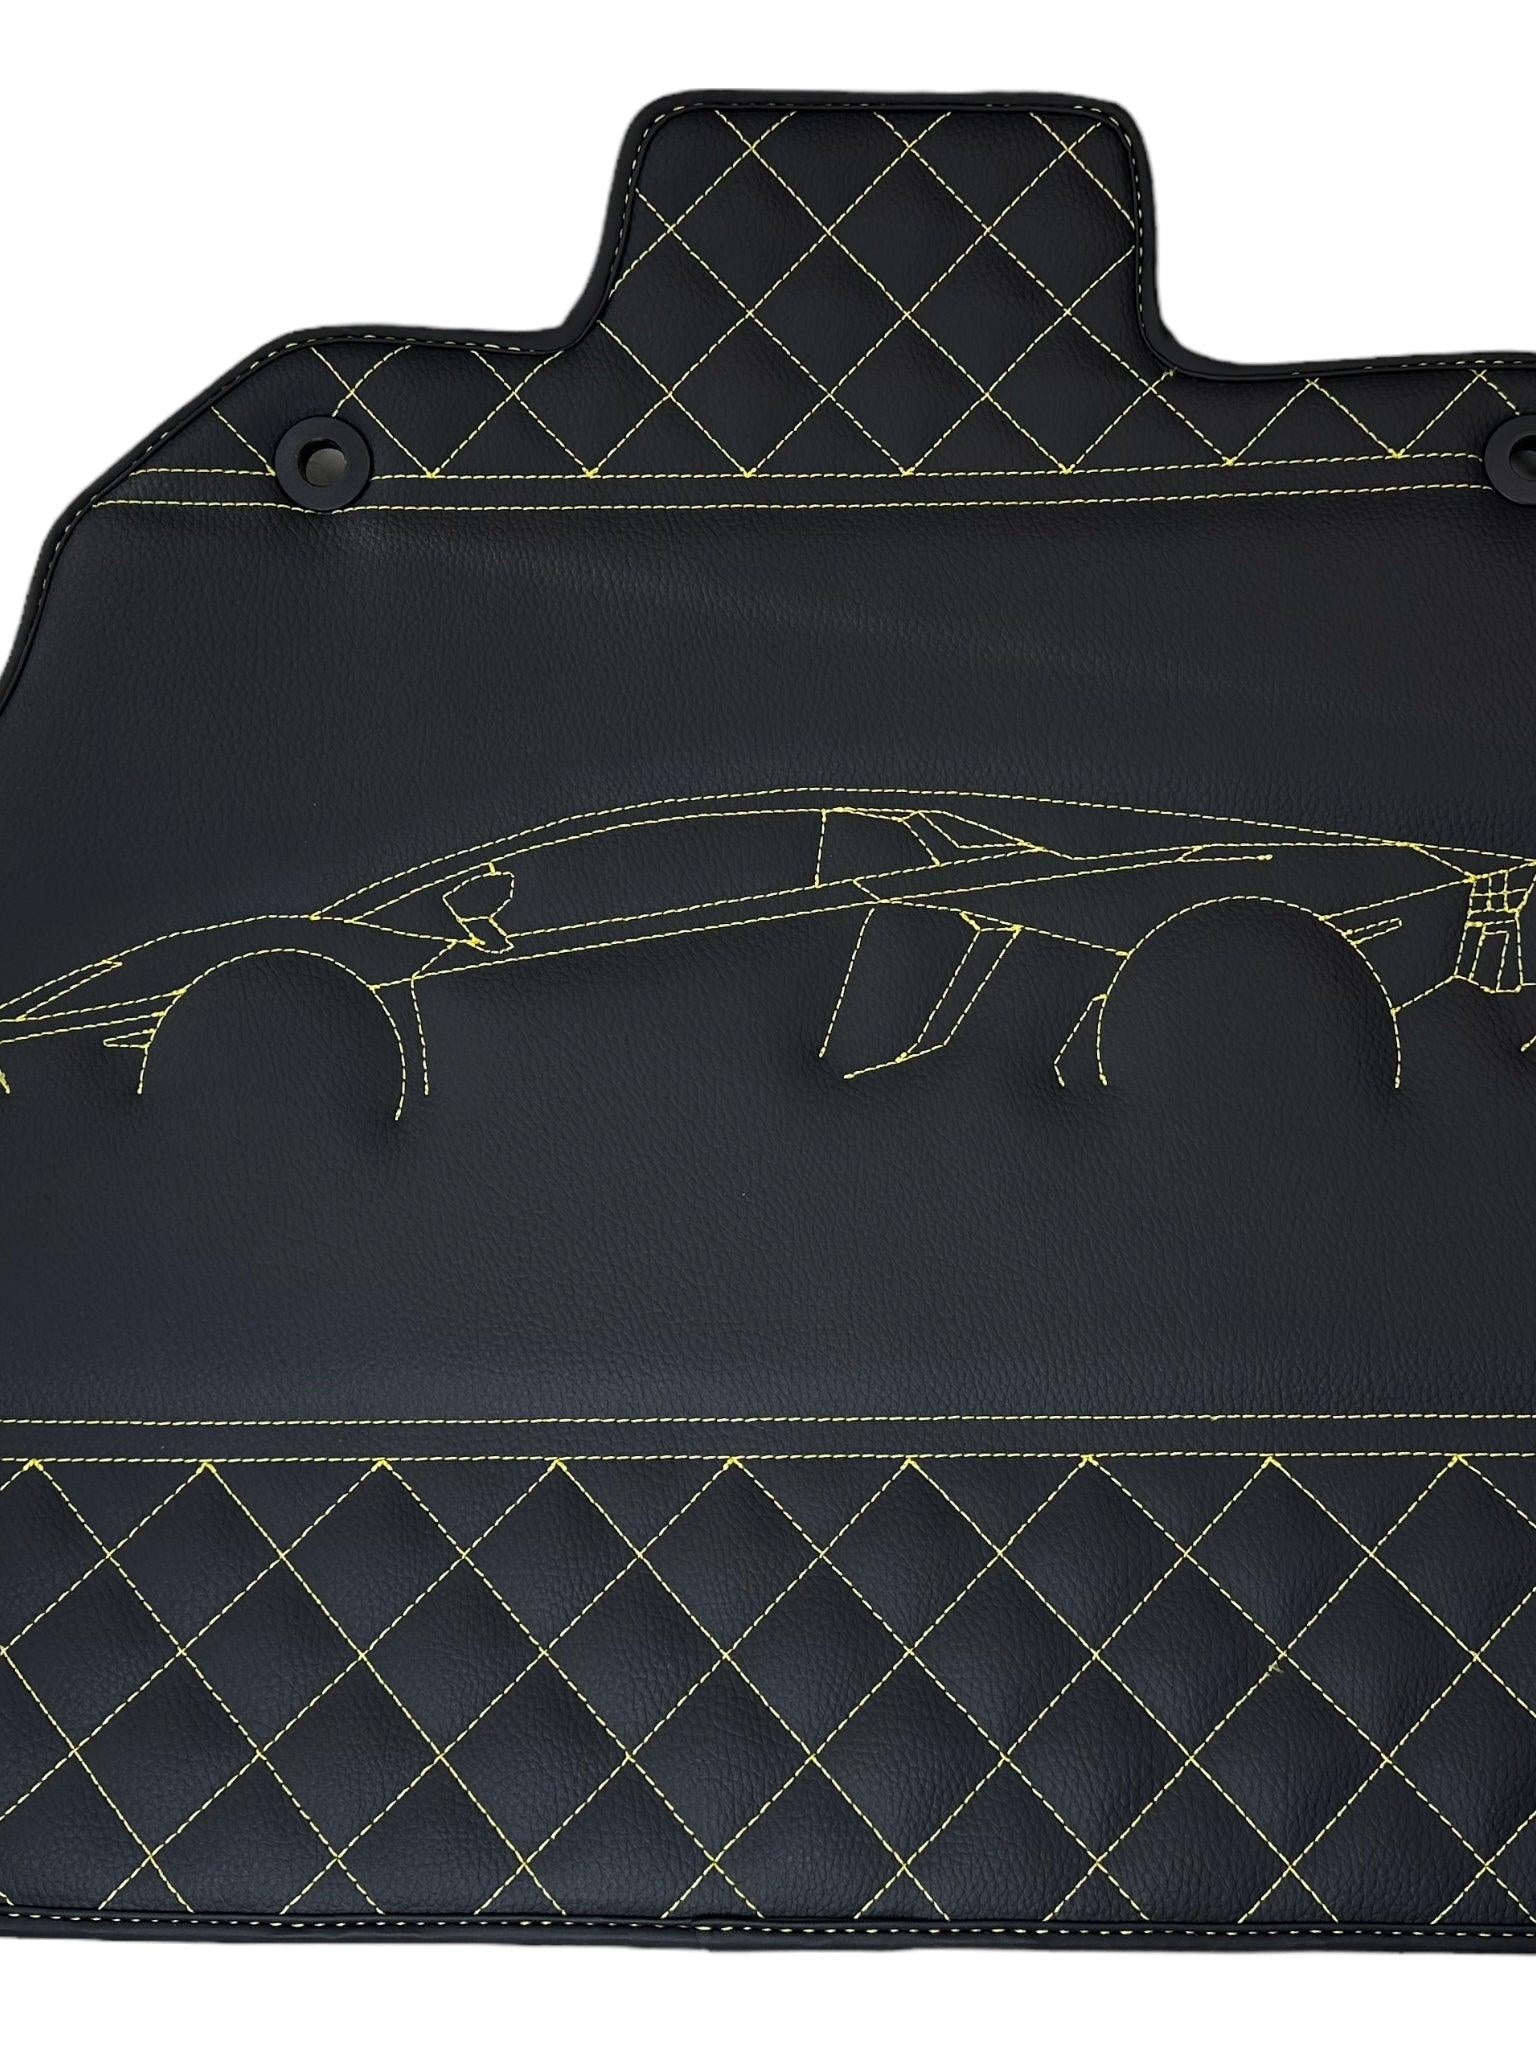 Leather Floor Mats for Lamborghini Aventador SV SVJ